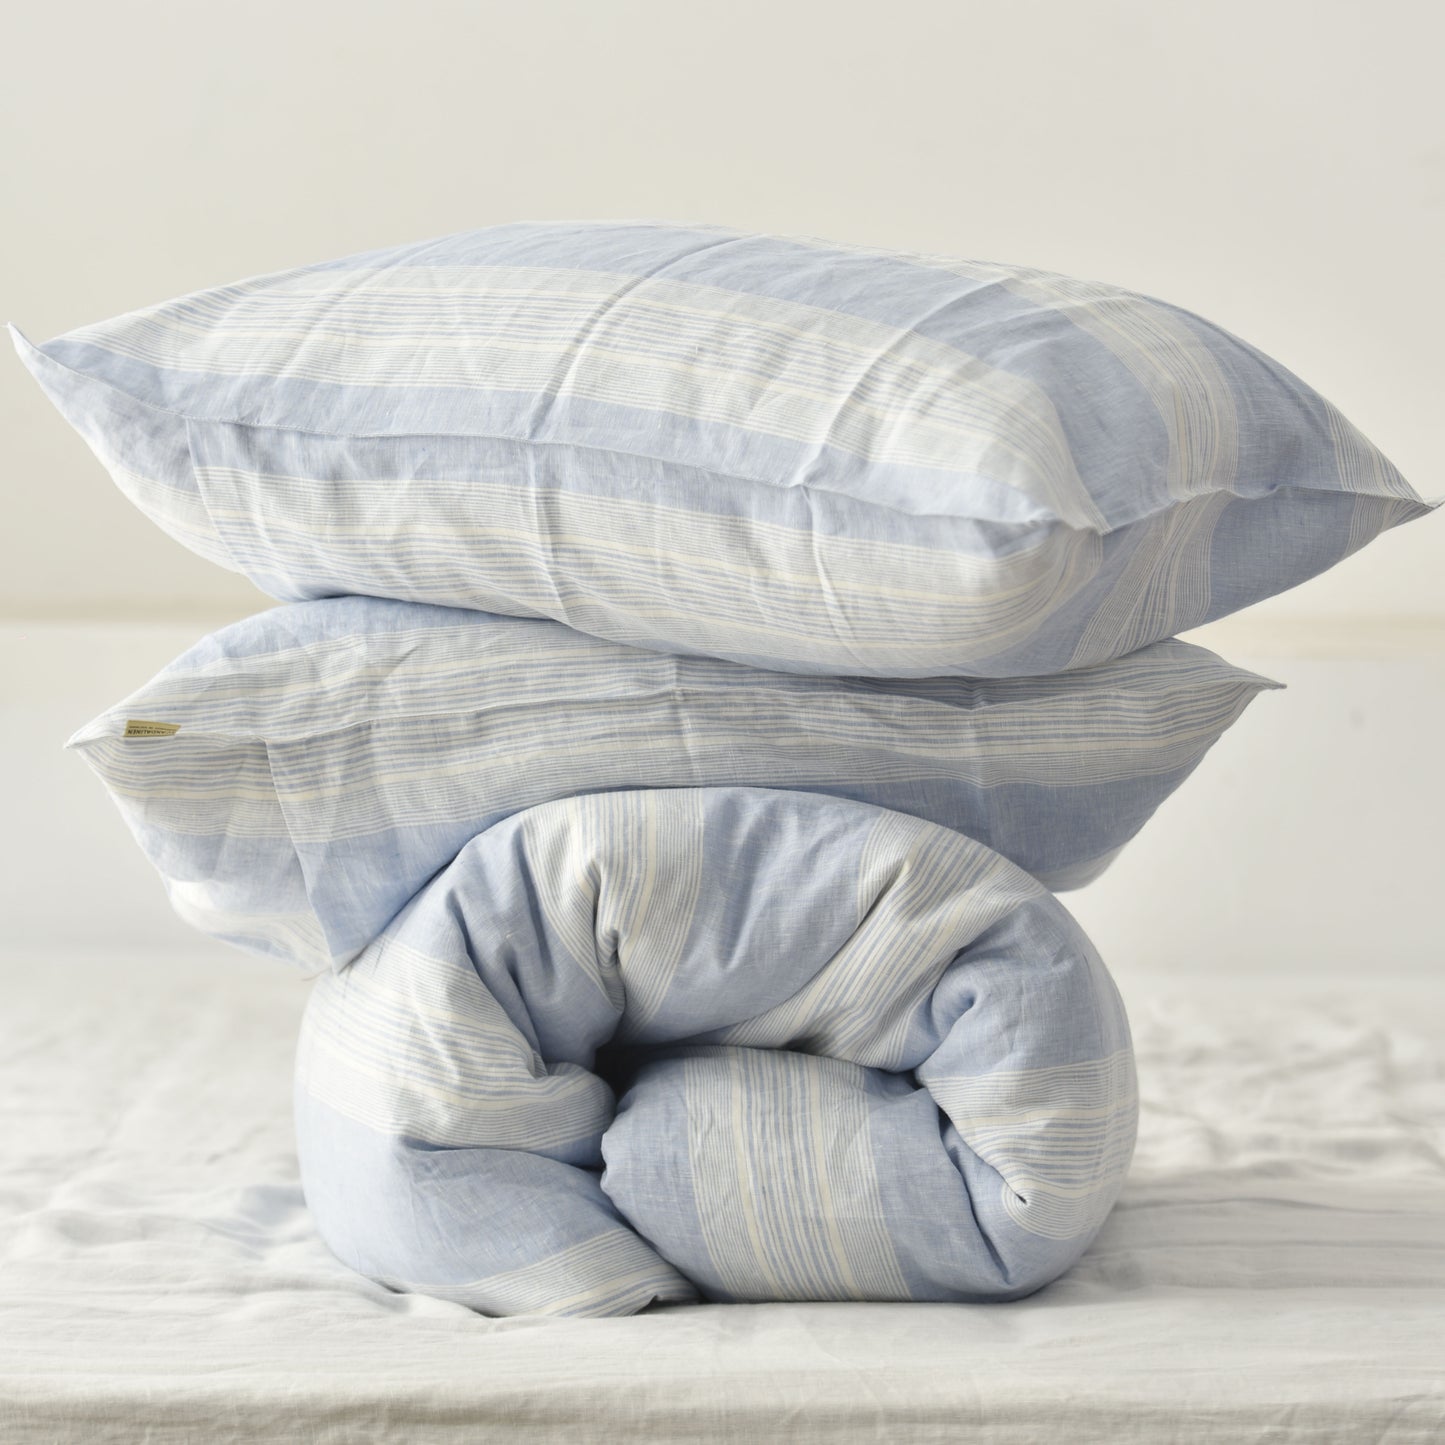 Blue Striped French Linen Duvet Cover+2 Pillowcases Set - Yarn Dyeing 60